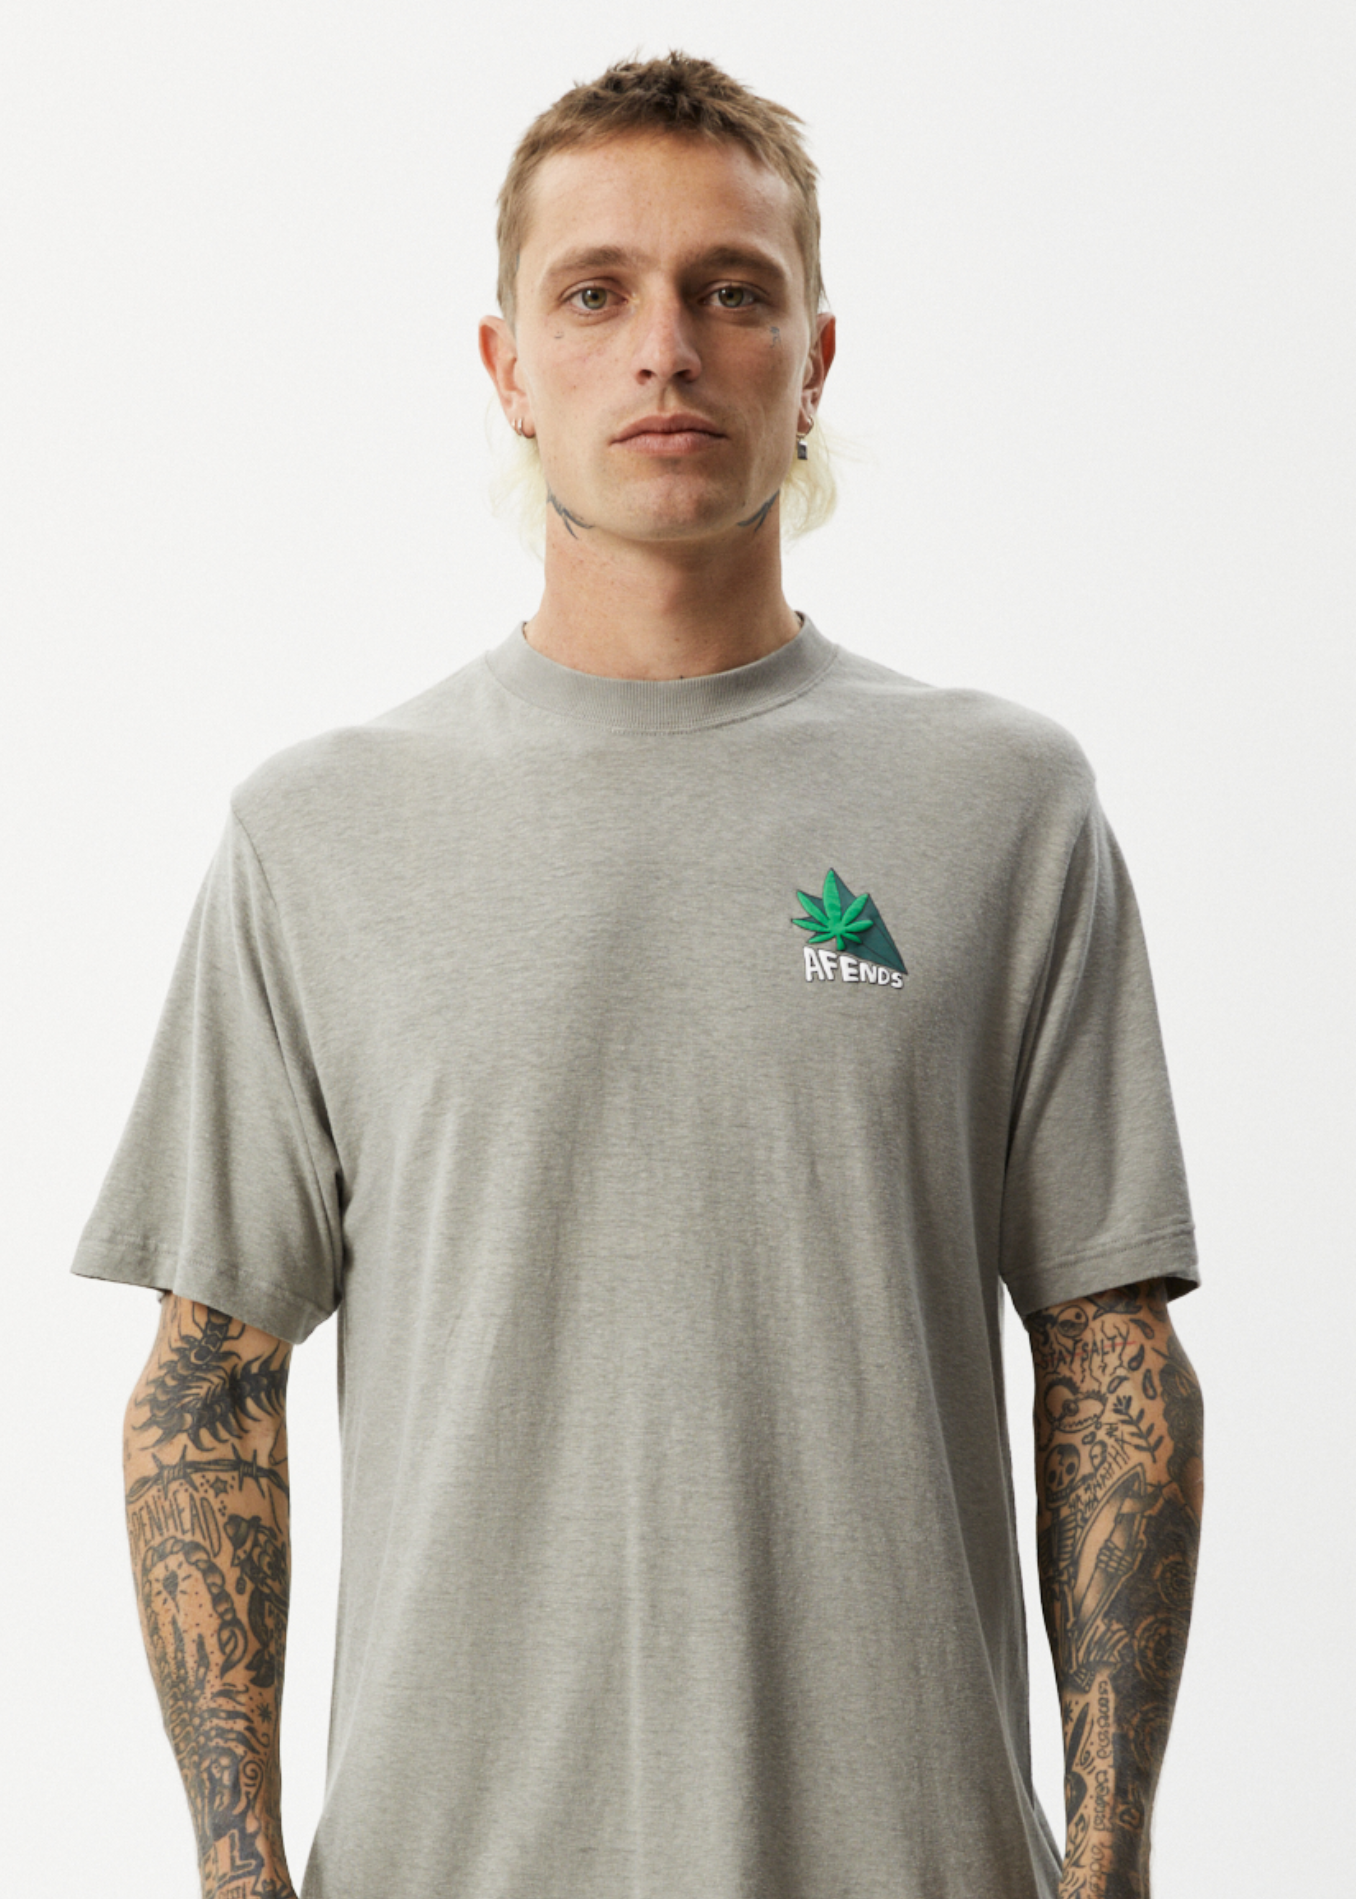 Afends Mens Crops - Retro Logo T-Shirt - Olive 